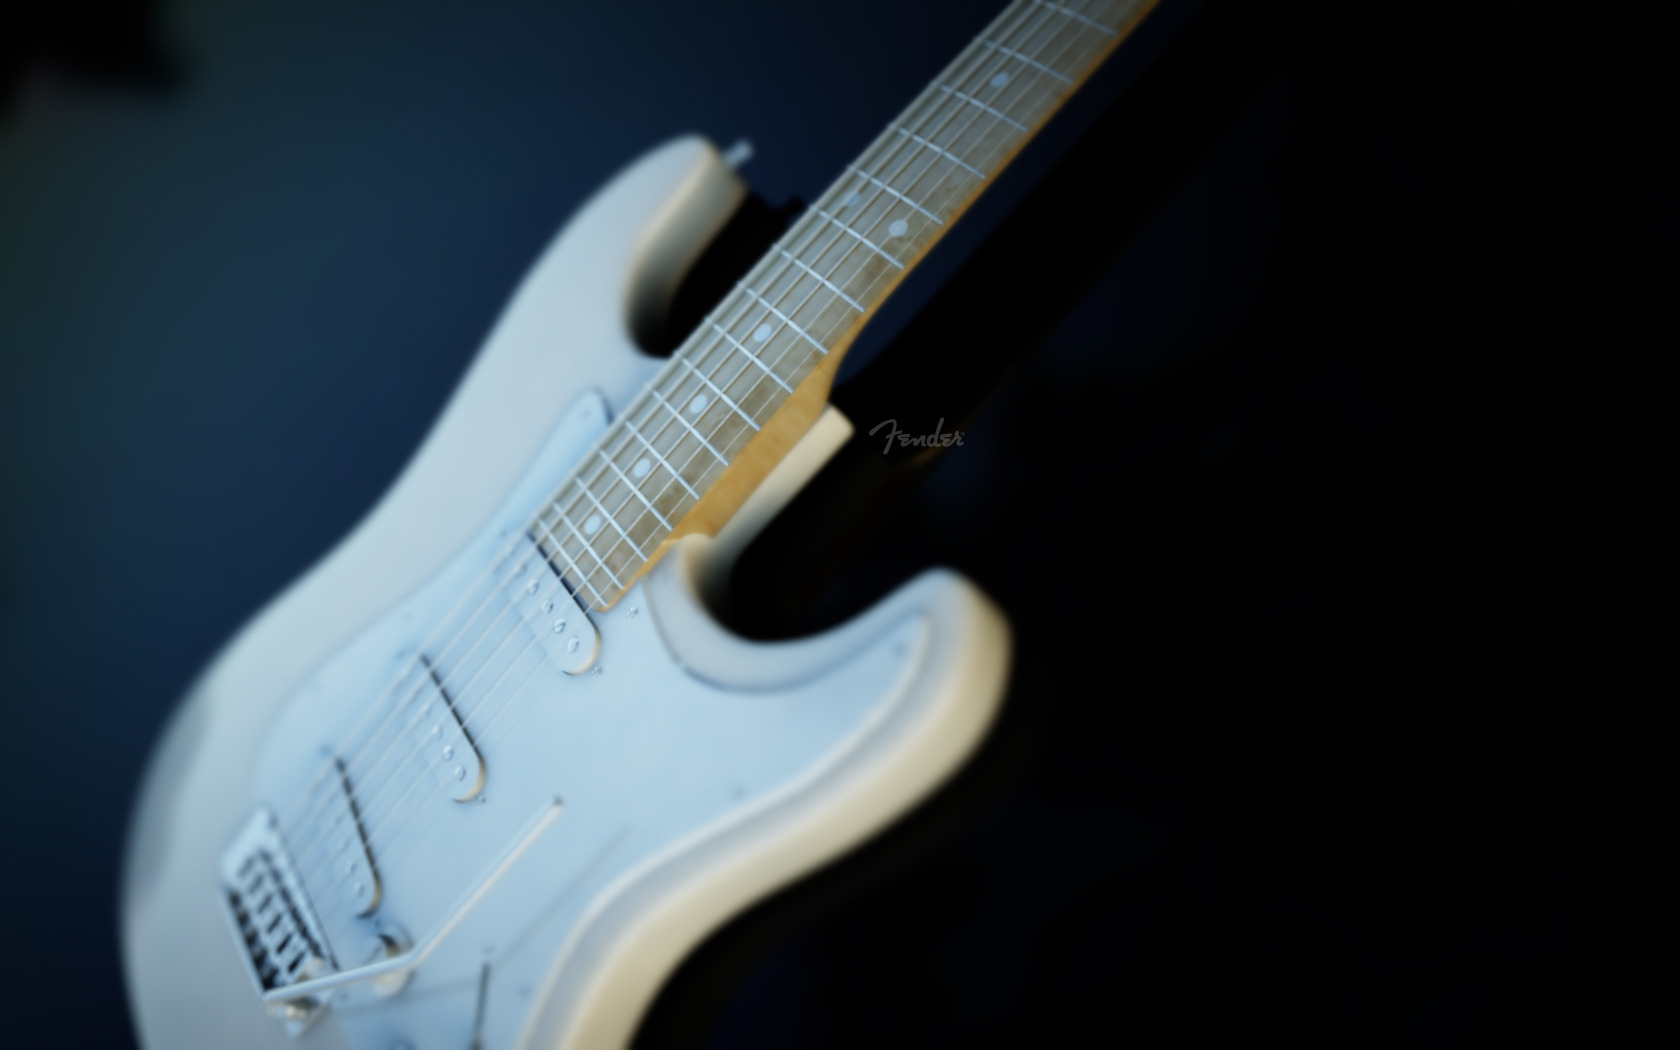 Guitar - Fender Guitar Wallpaper Hd - HD Wallpaper 